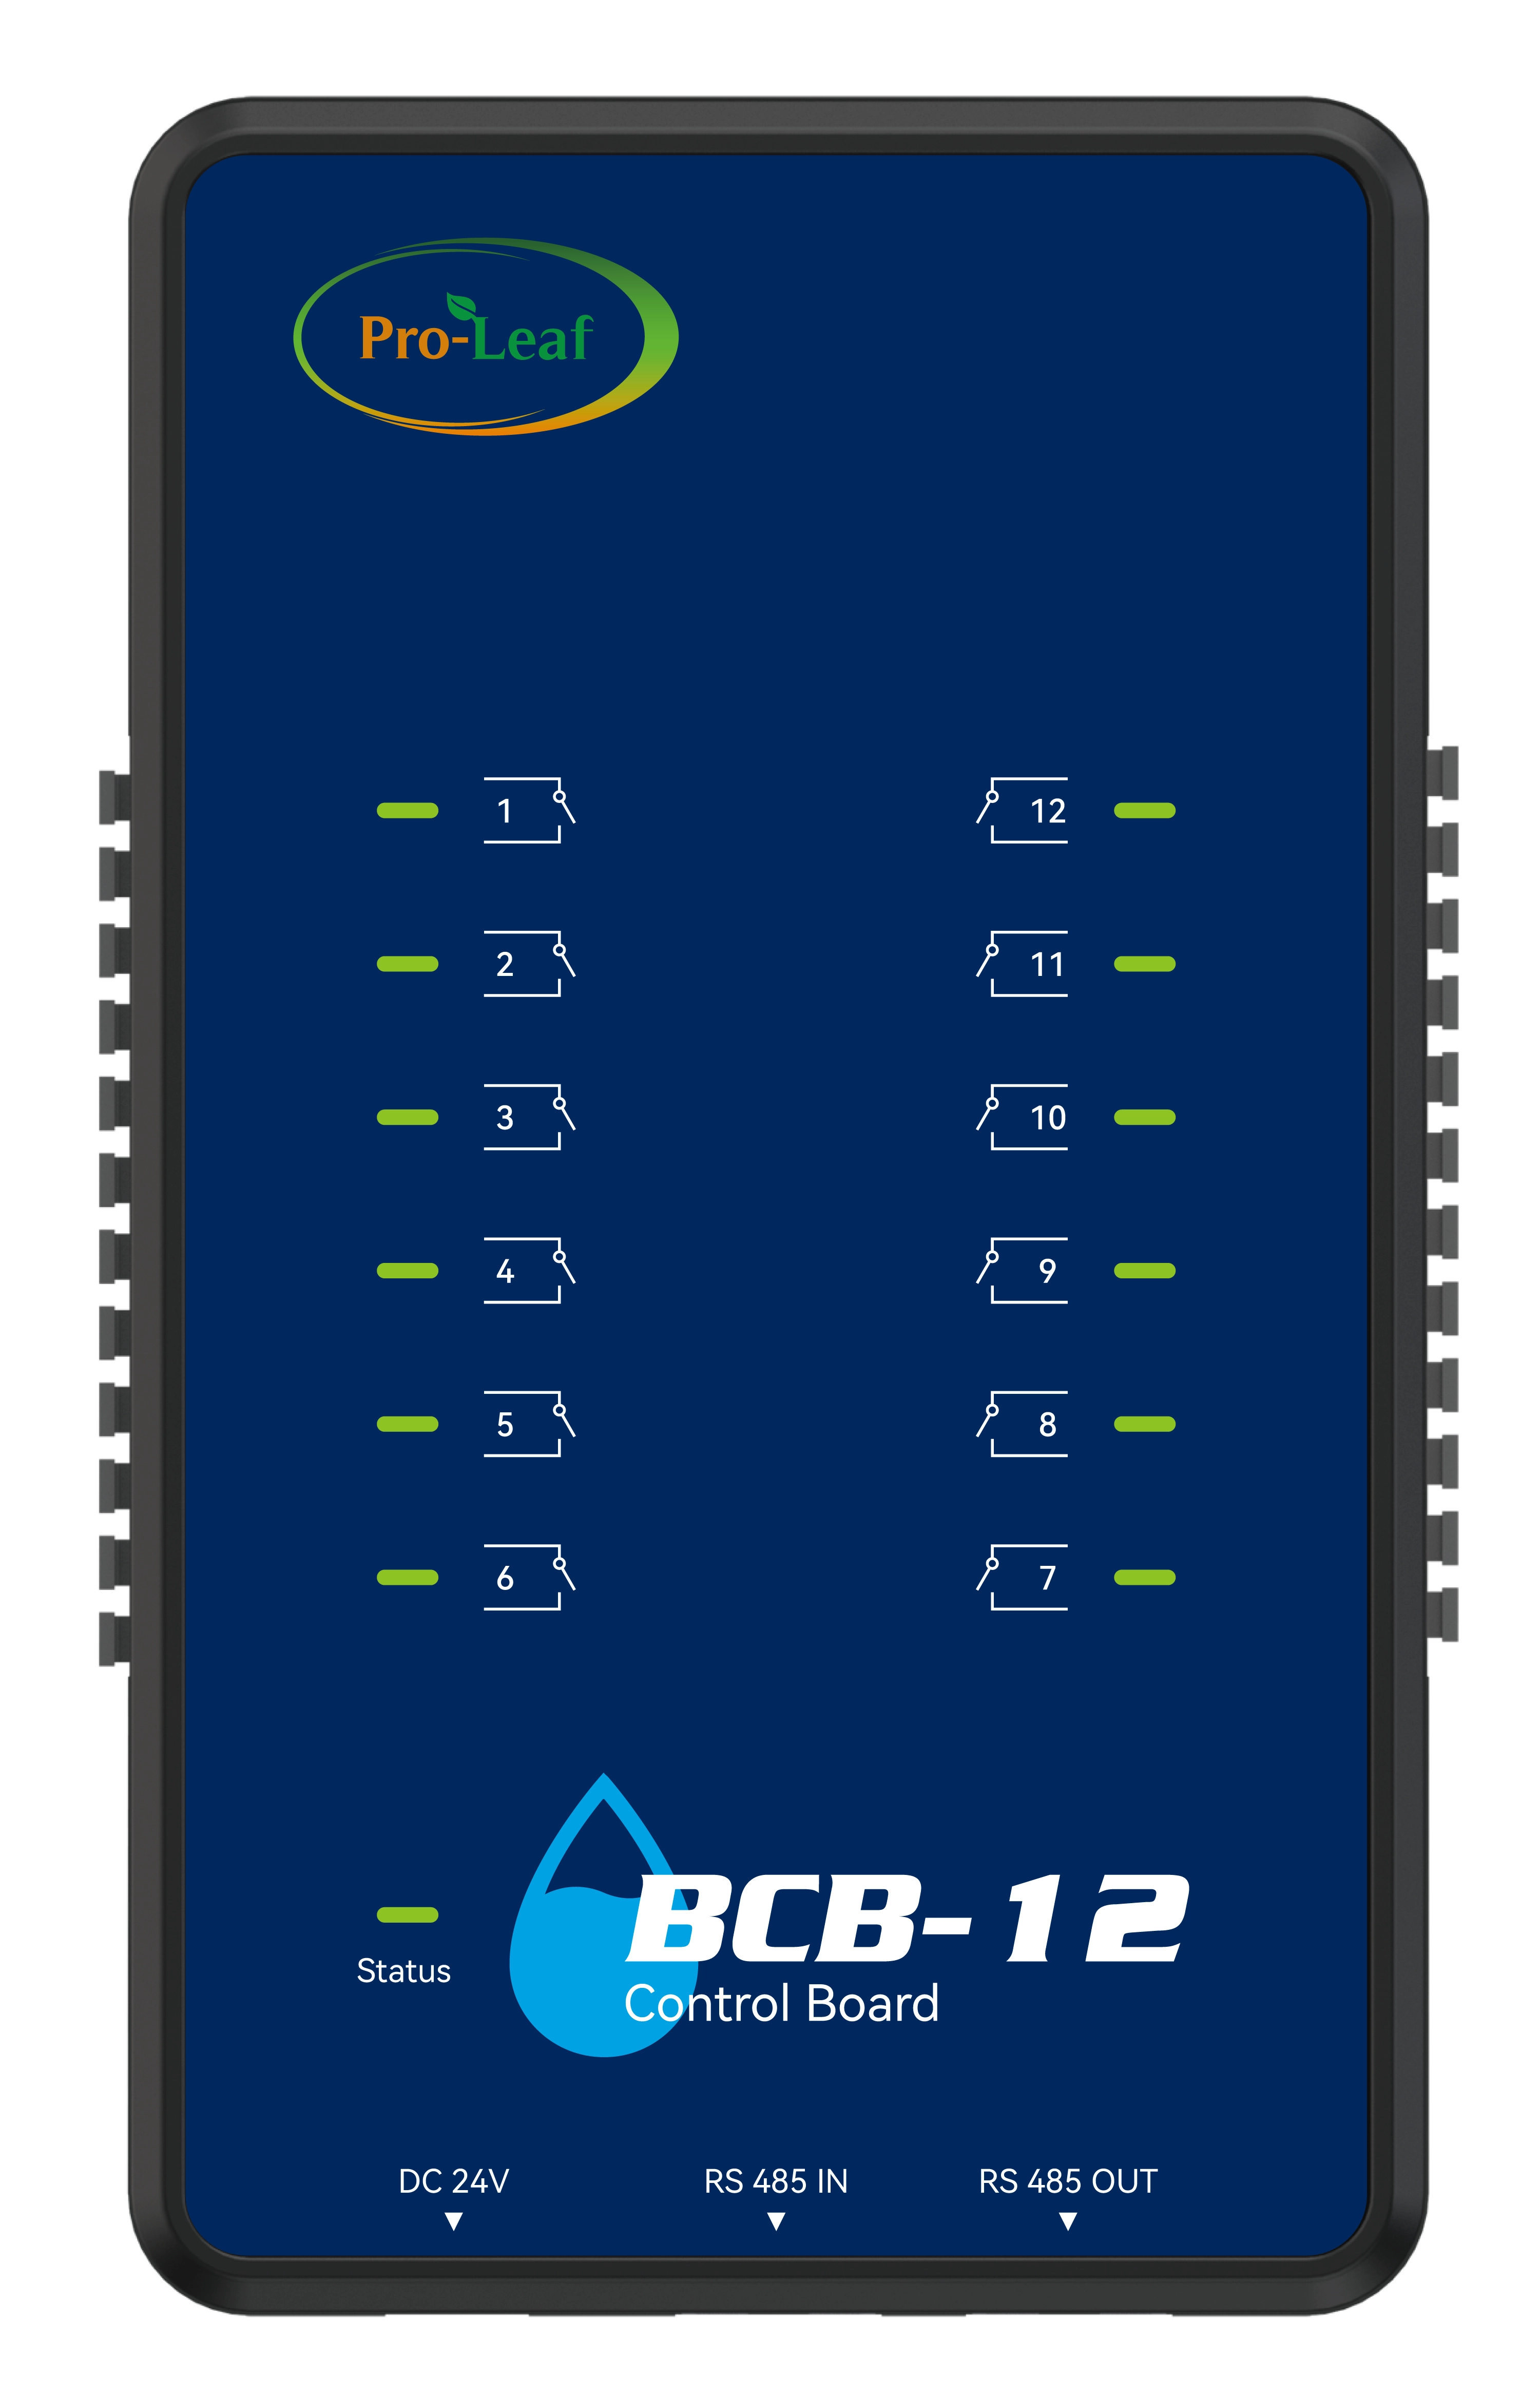 BeHive-I Control
Board BCB-12